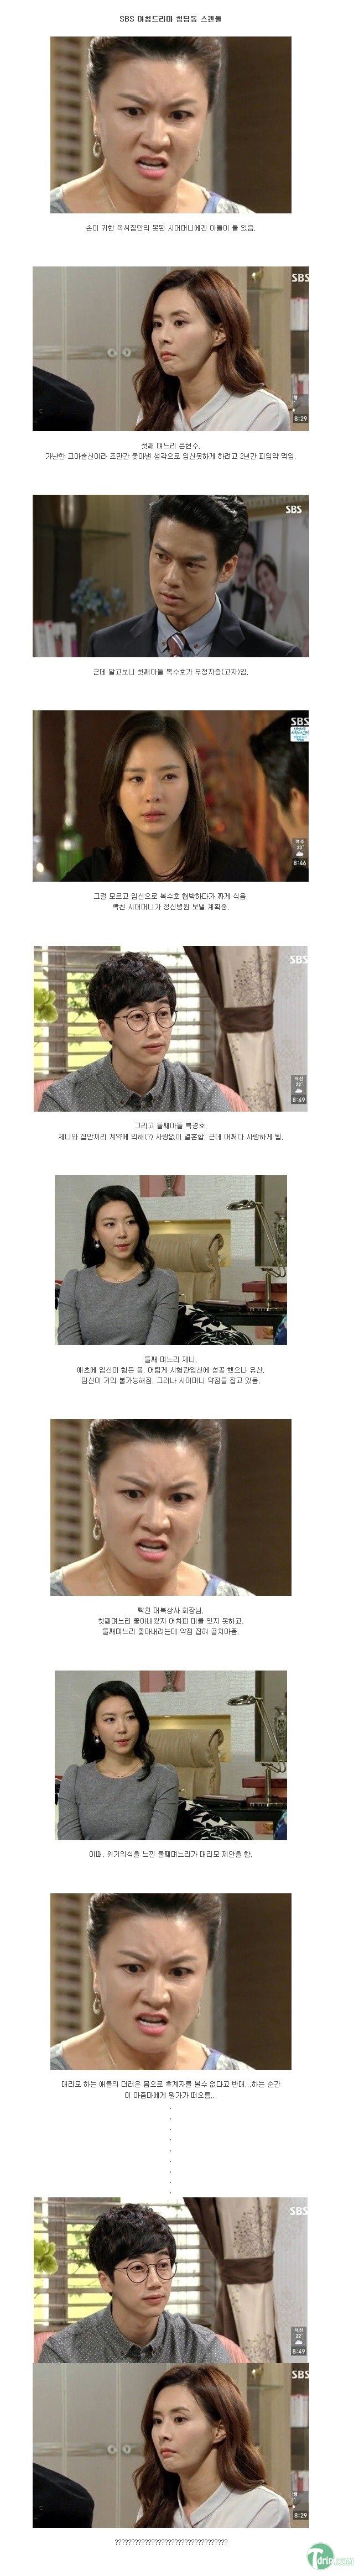 image.jpg : 막장을 달리는 한국 아침드라마